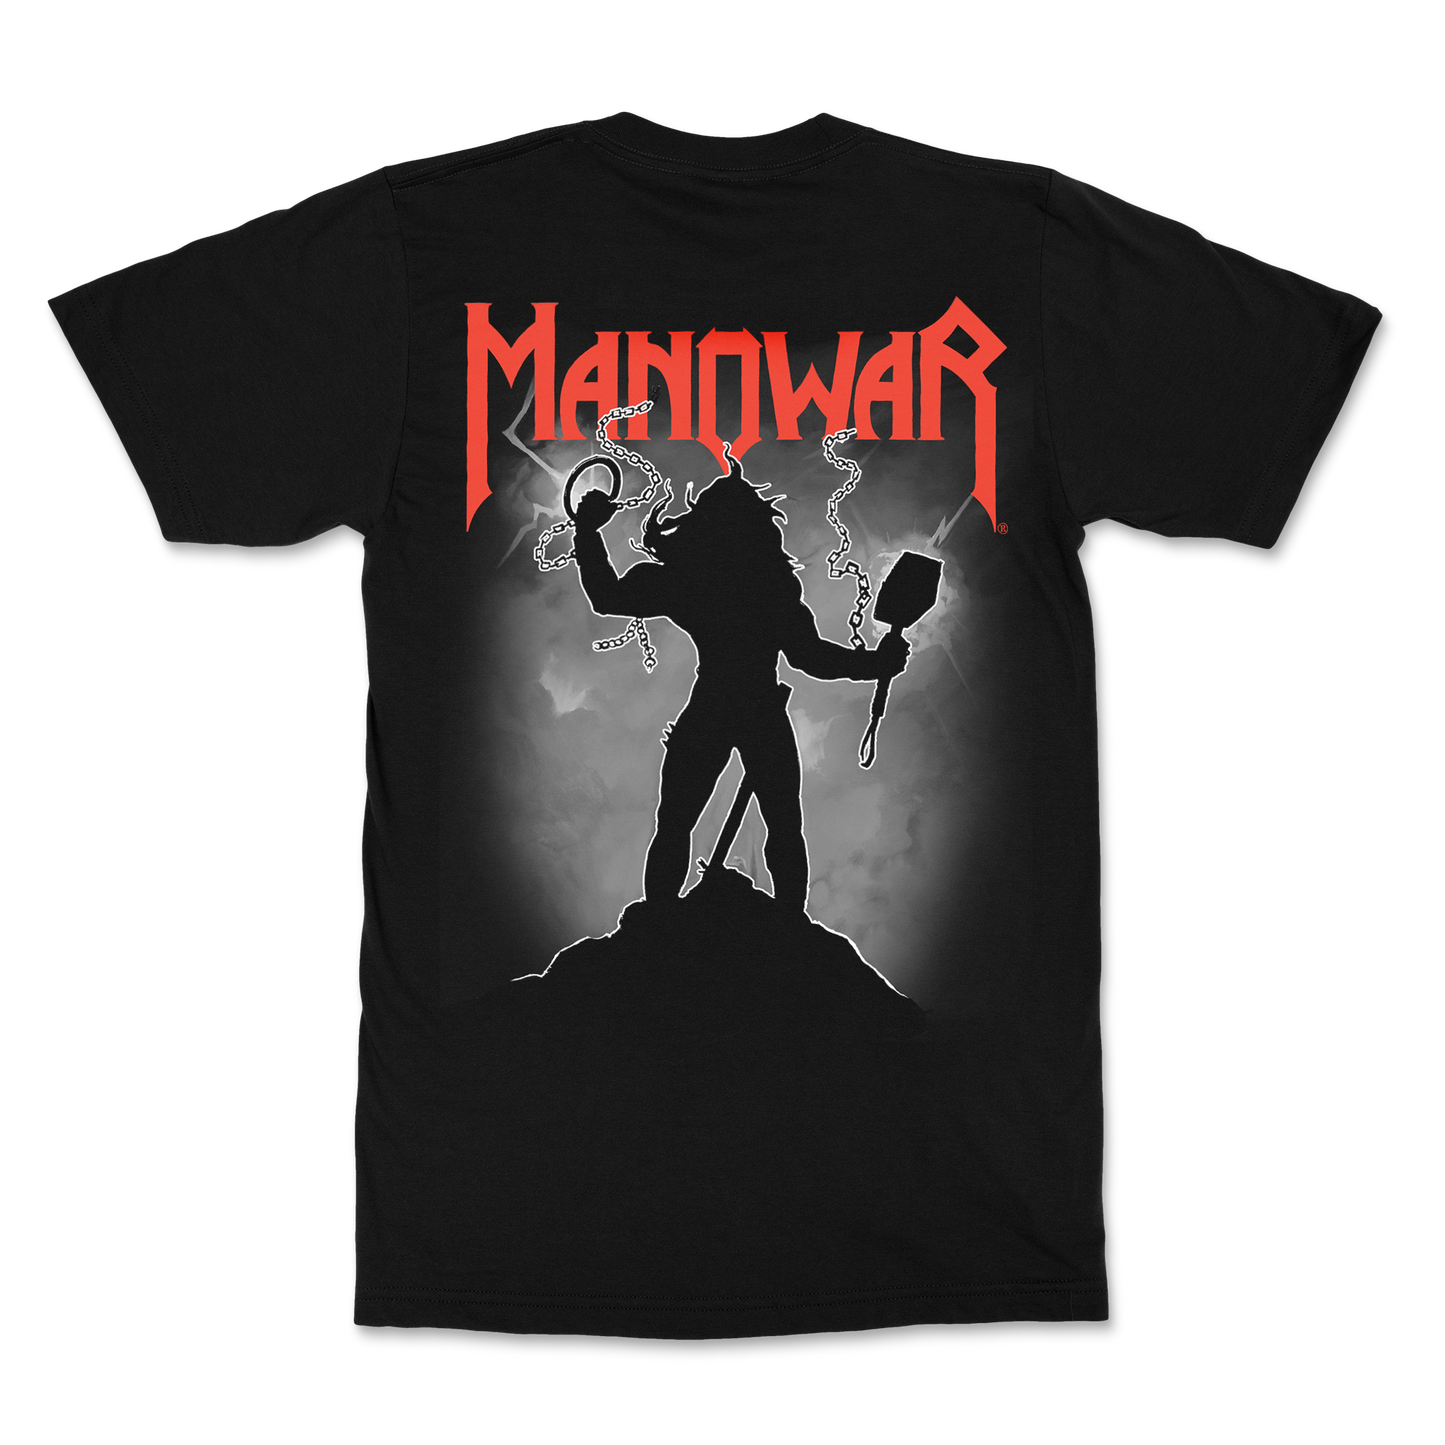 Manowar T-Shirt Gods And Kings (2017 Edition)